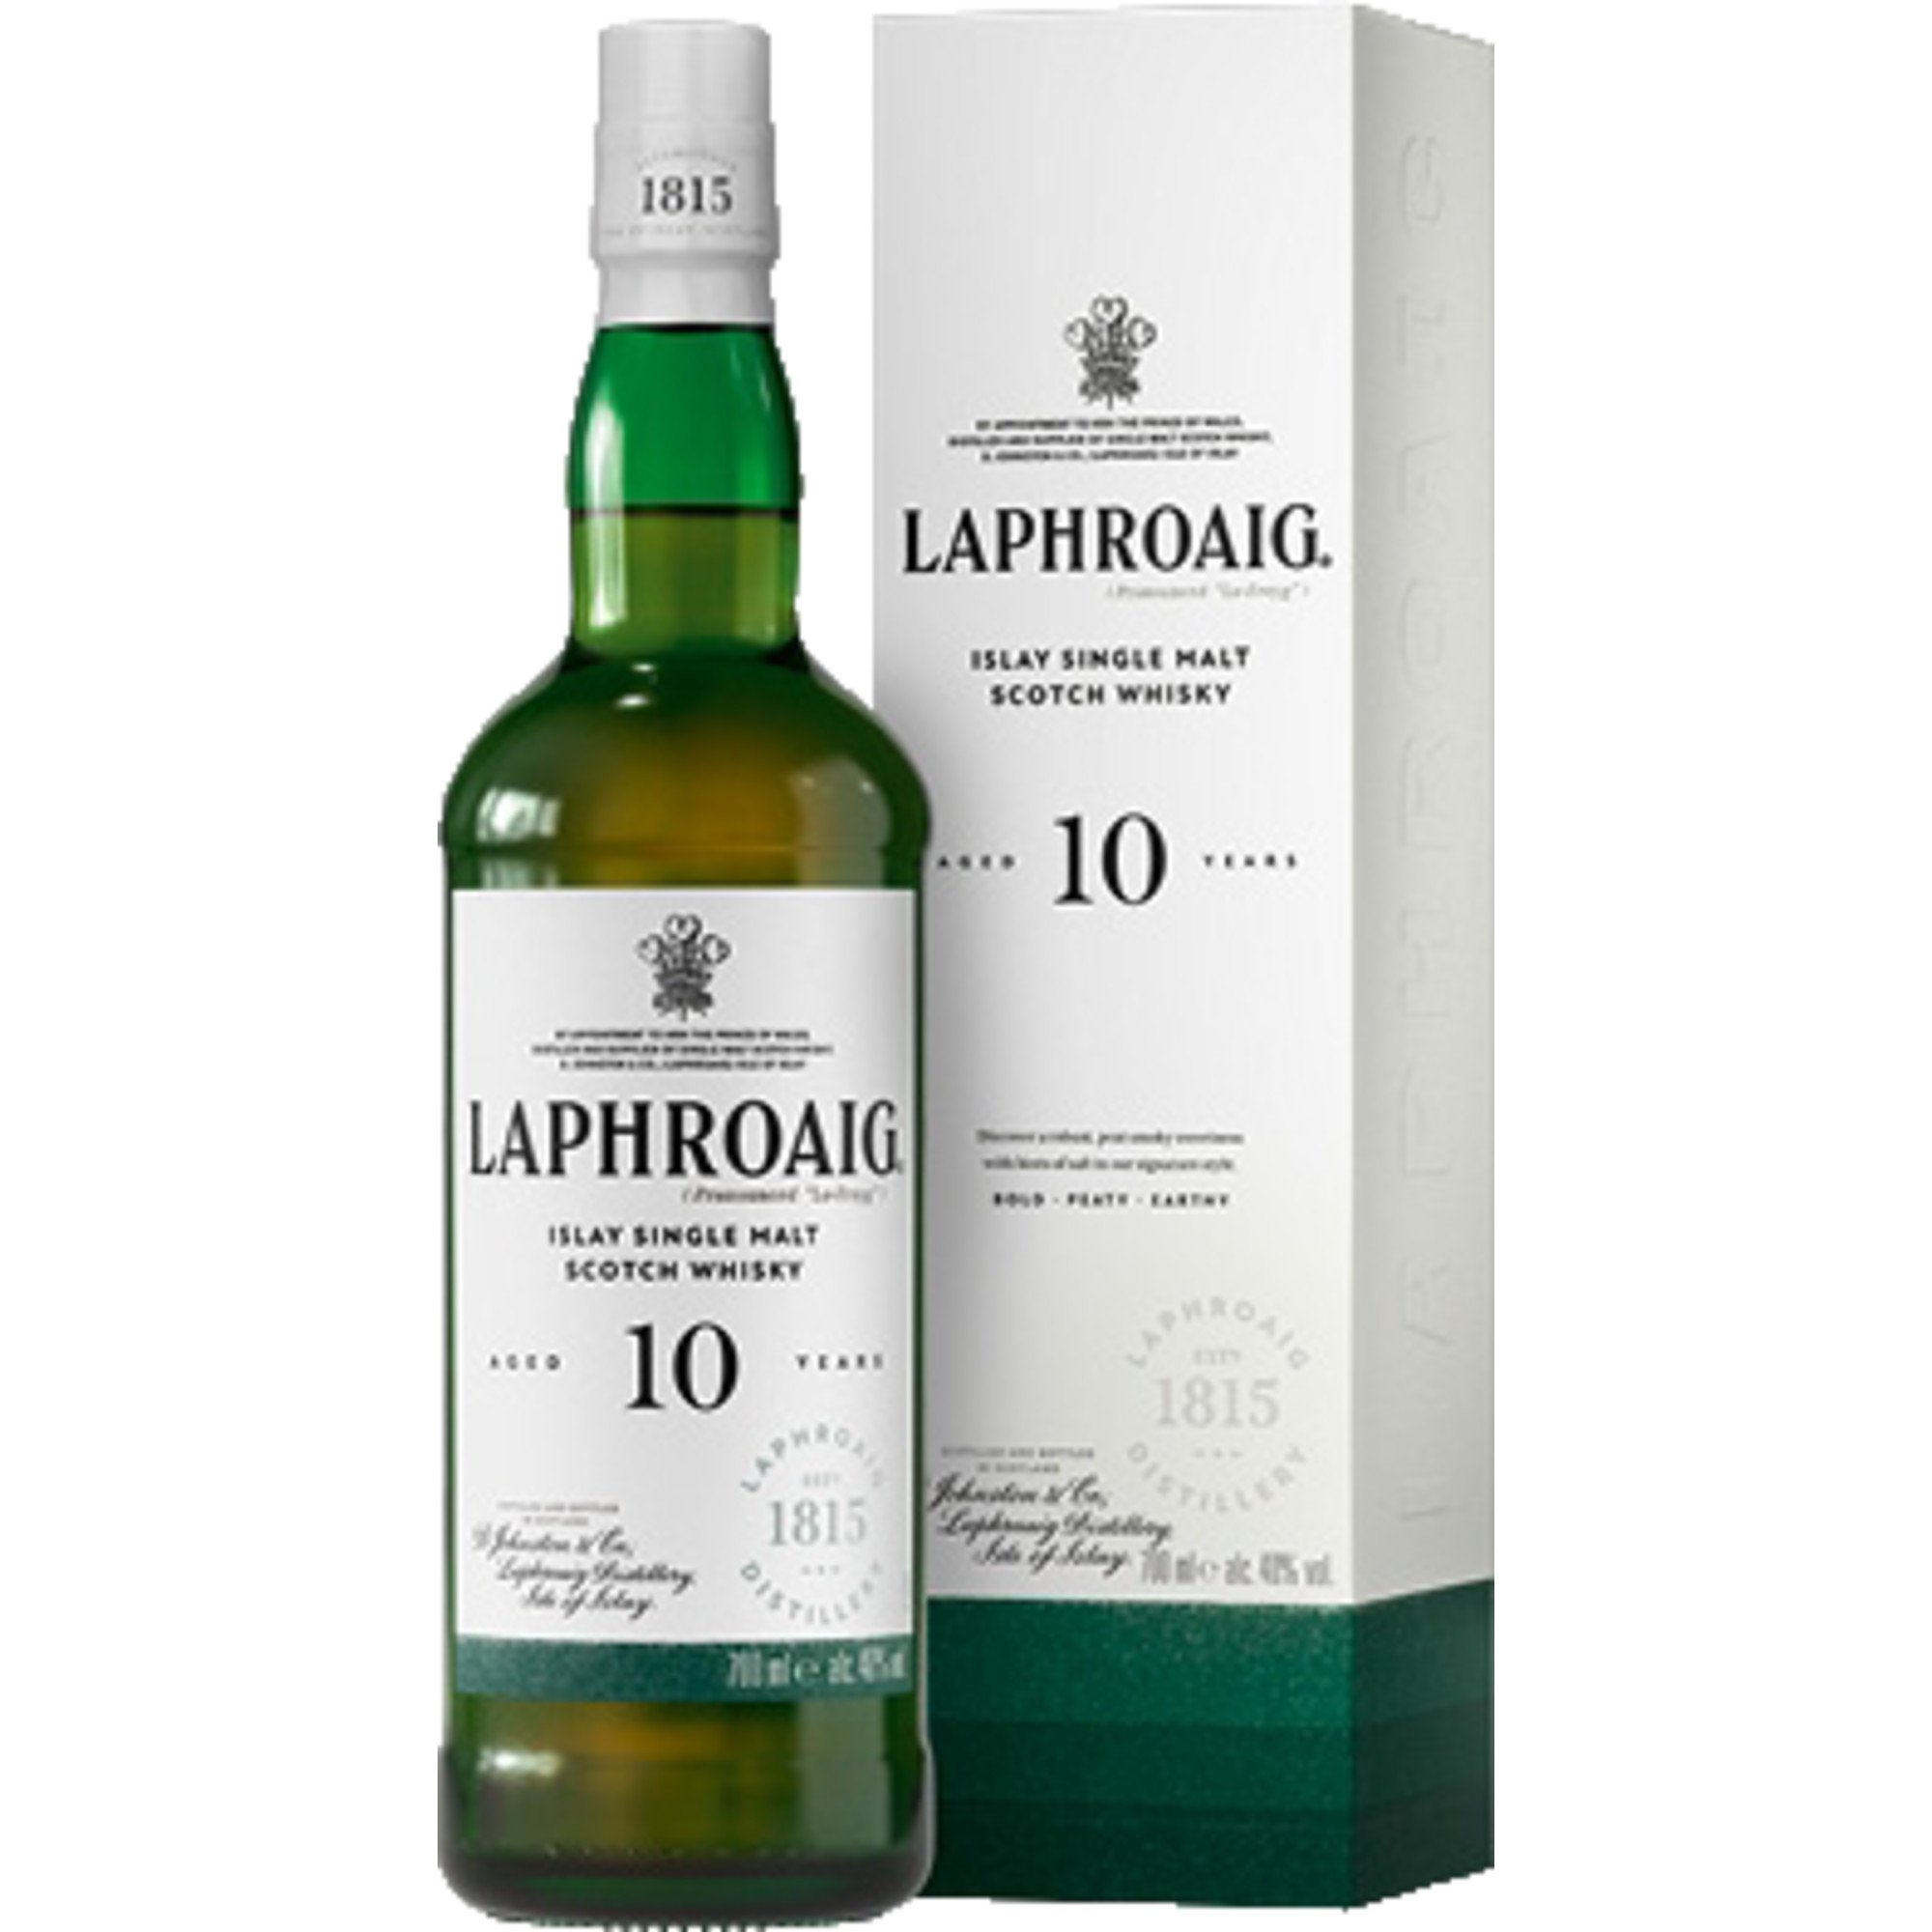 Laphroaig 10 YO Islay Single Malt Scotch Whisky, 40 % vol. 0,7 L, Schottland, Spirituosen D. Johnston & Company (Laphroaig) Ltd, Springburn Bond, Carlisle St, Glasgow G21 1EQ, Scotland Hawesko DE